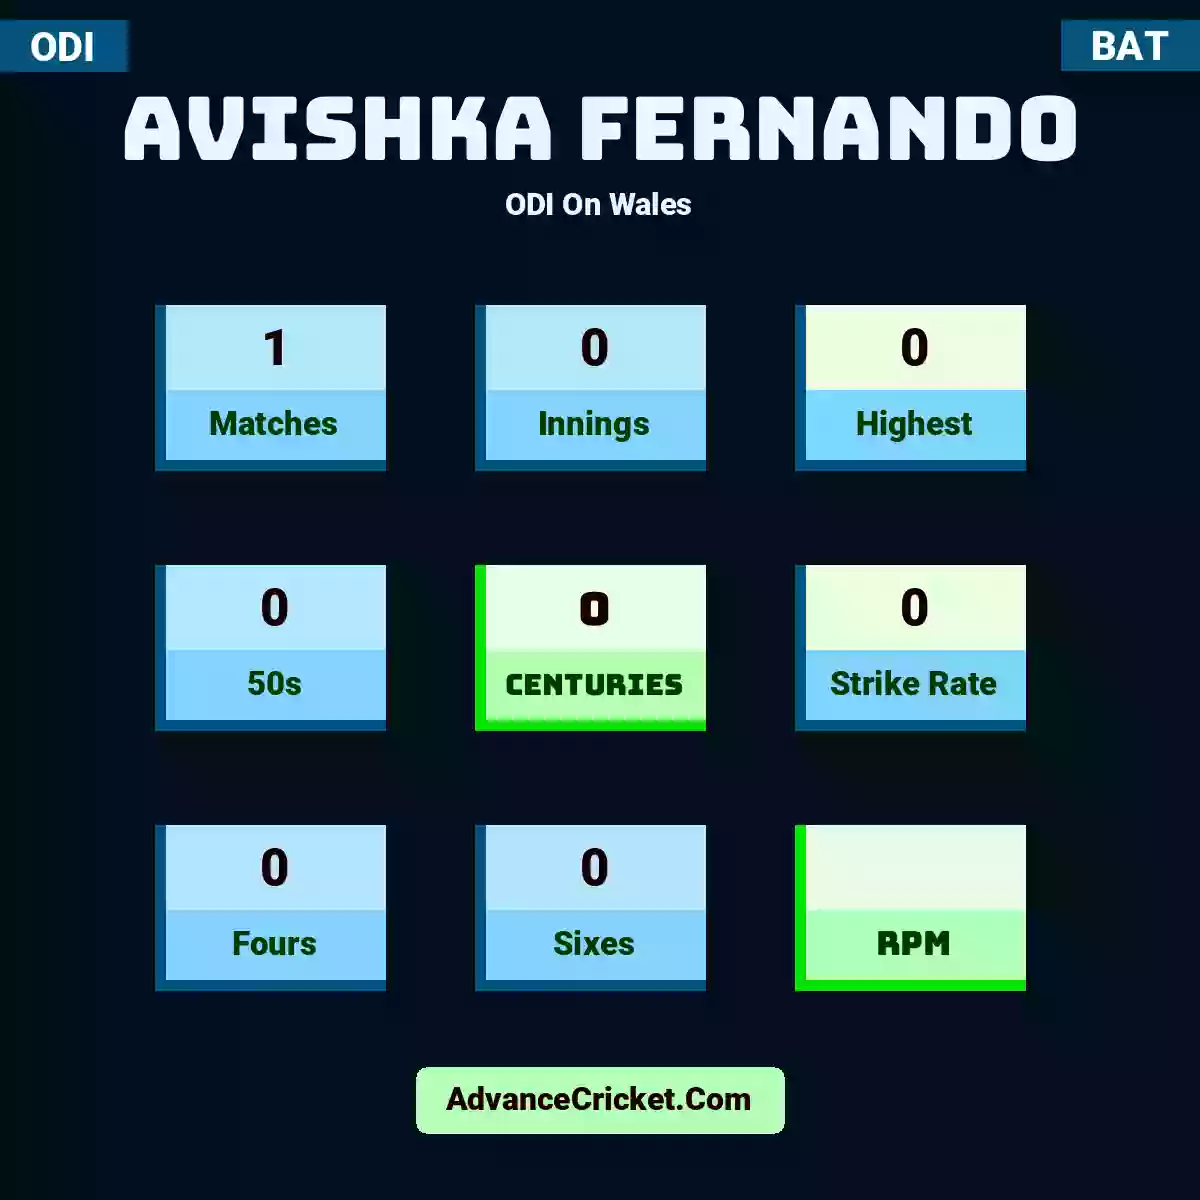 Avishka Fernando ODI  On Wales, Avishka Fernando played 1 matches, scored 0 runs as highest, 0 half-centuries, and 0 centuries, with a strike rate of 0. A.Fernando hit 0 fours and 0 sixes.